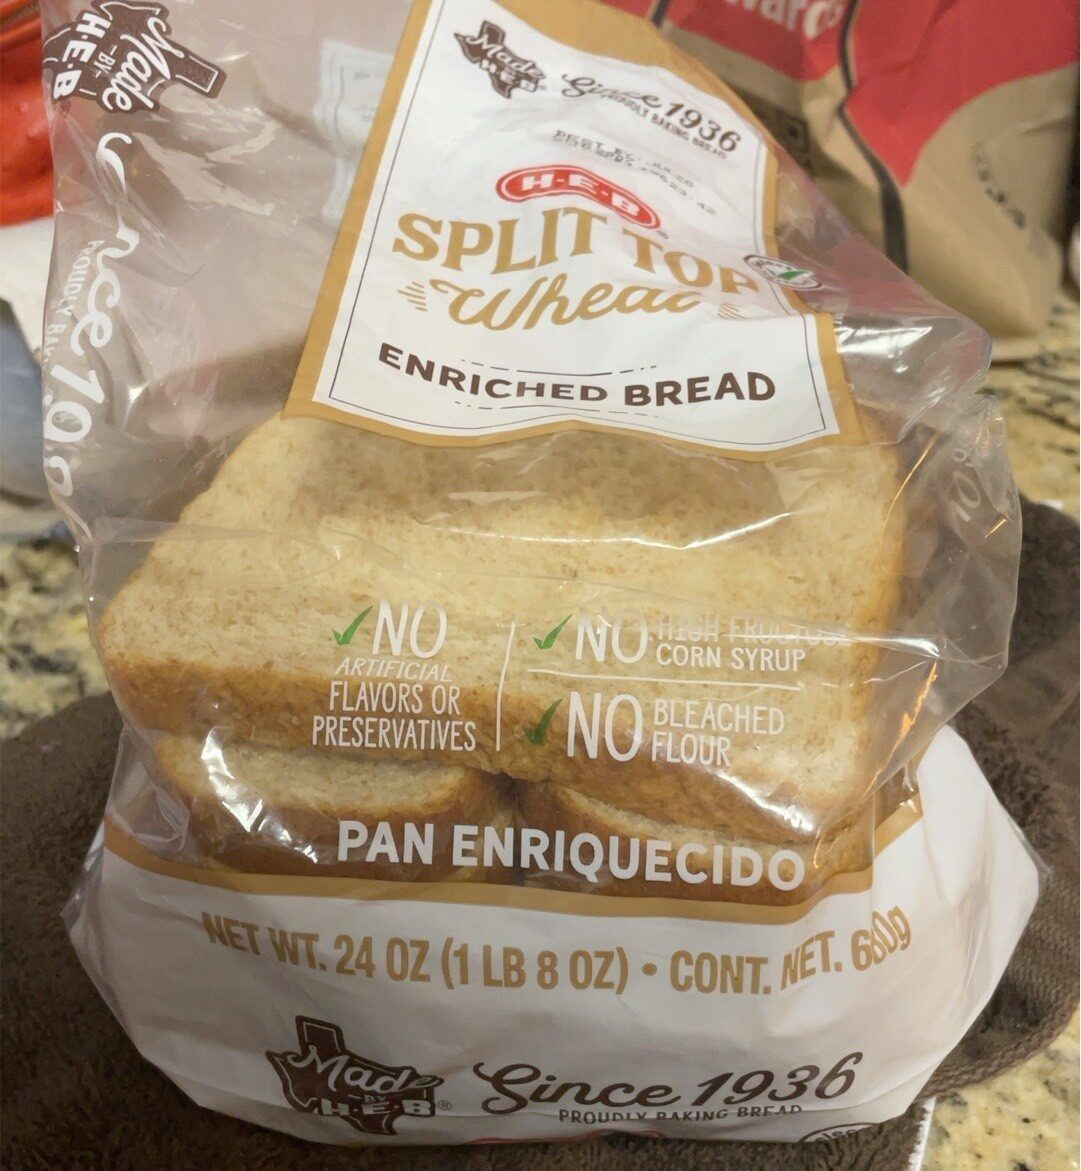 Split top wheat bread - Product